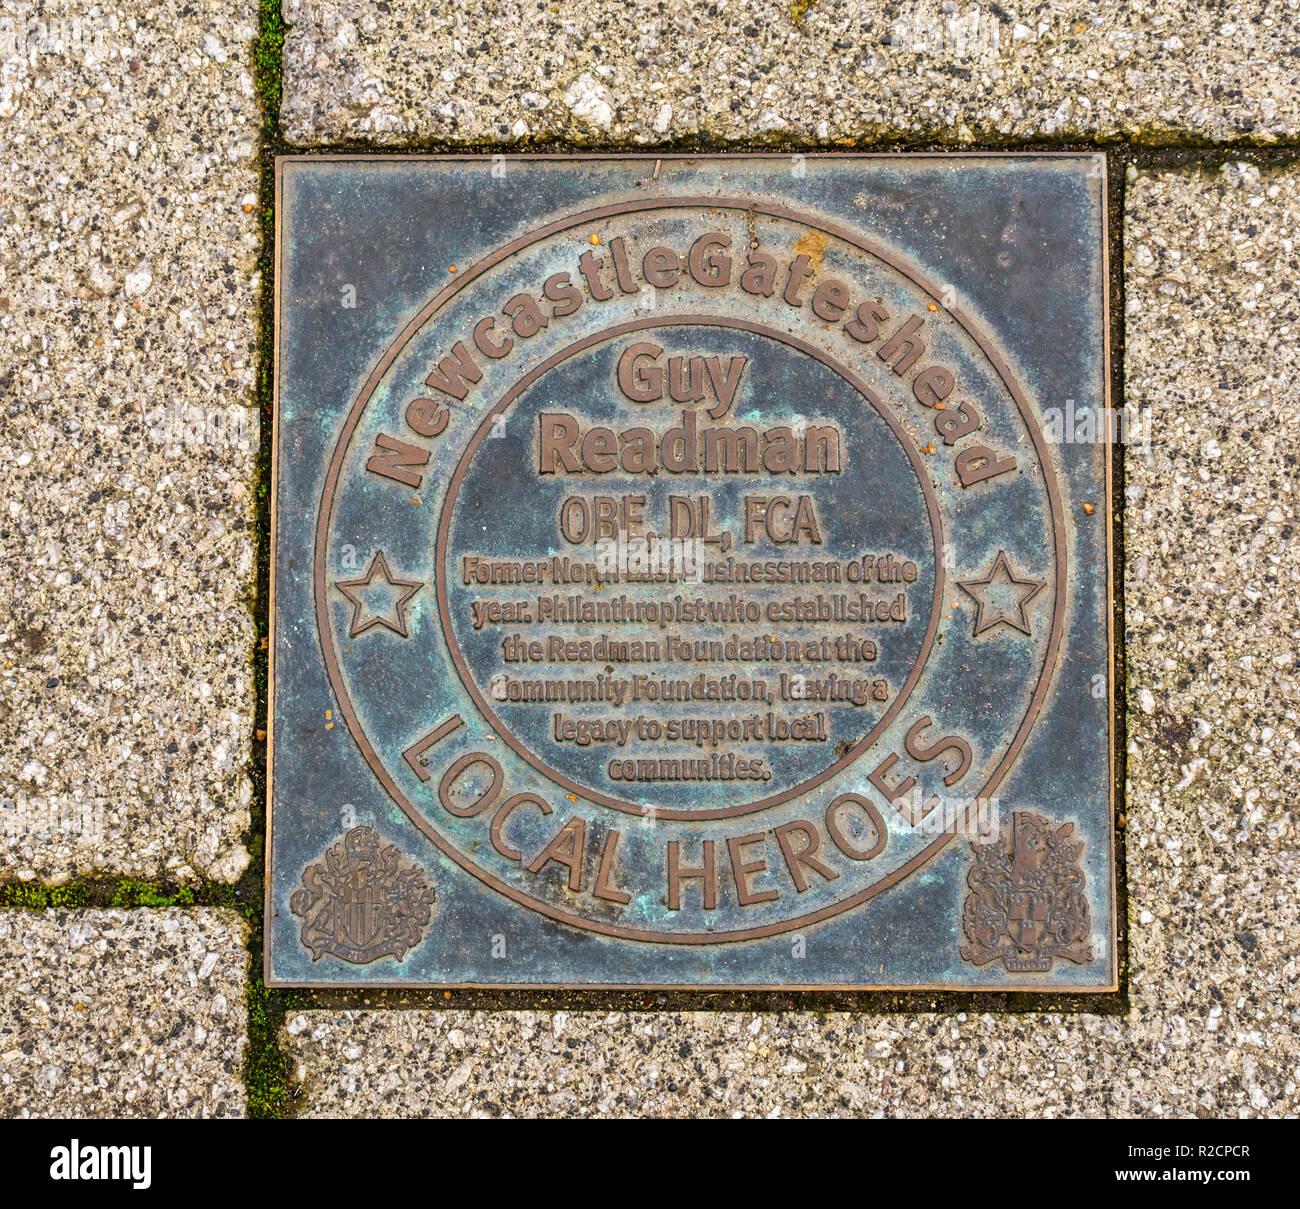 Bronze plaque honouring Newcastle and Gateshead inspiring people of past 60 years, Guy Readman, Quayside. Newcastle Upon Tyne, England, UK Stock Photo